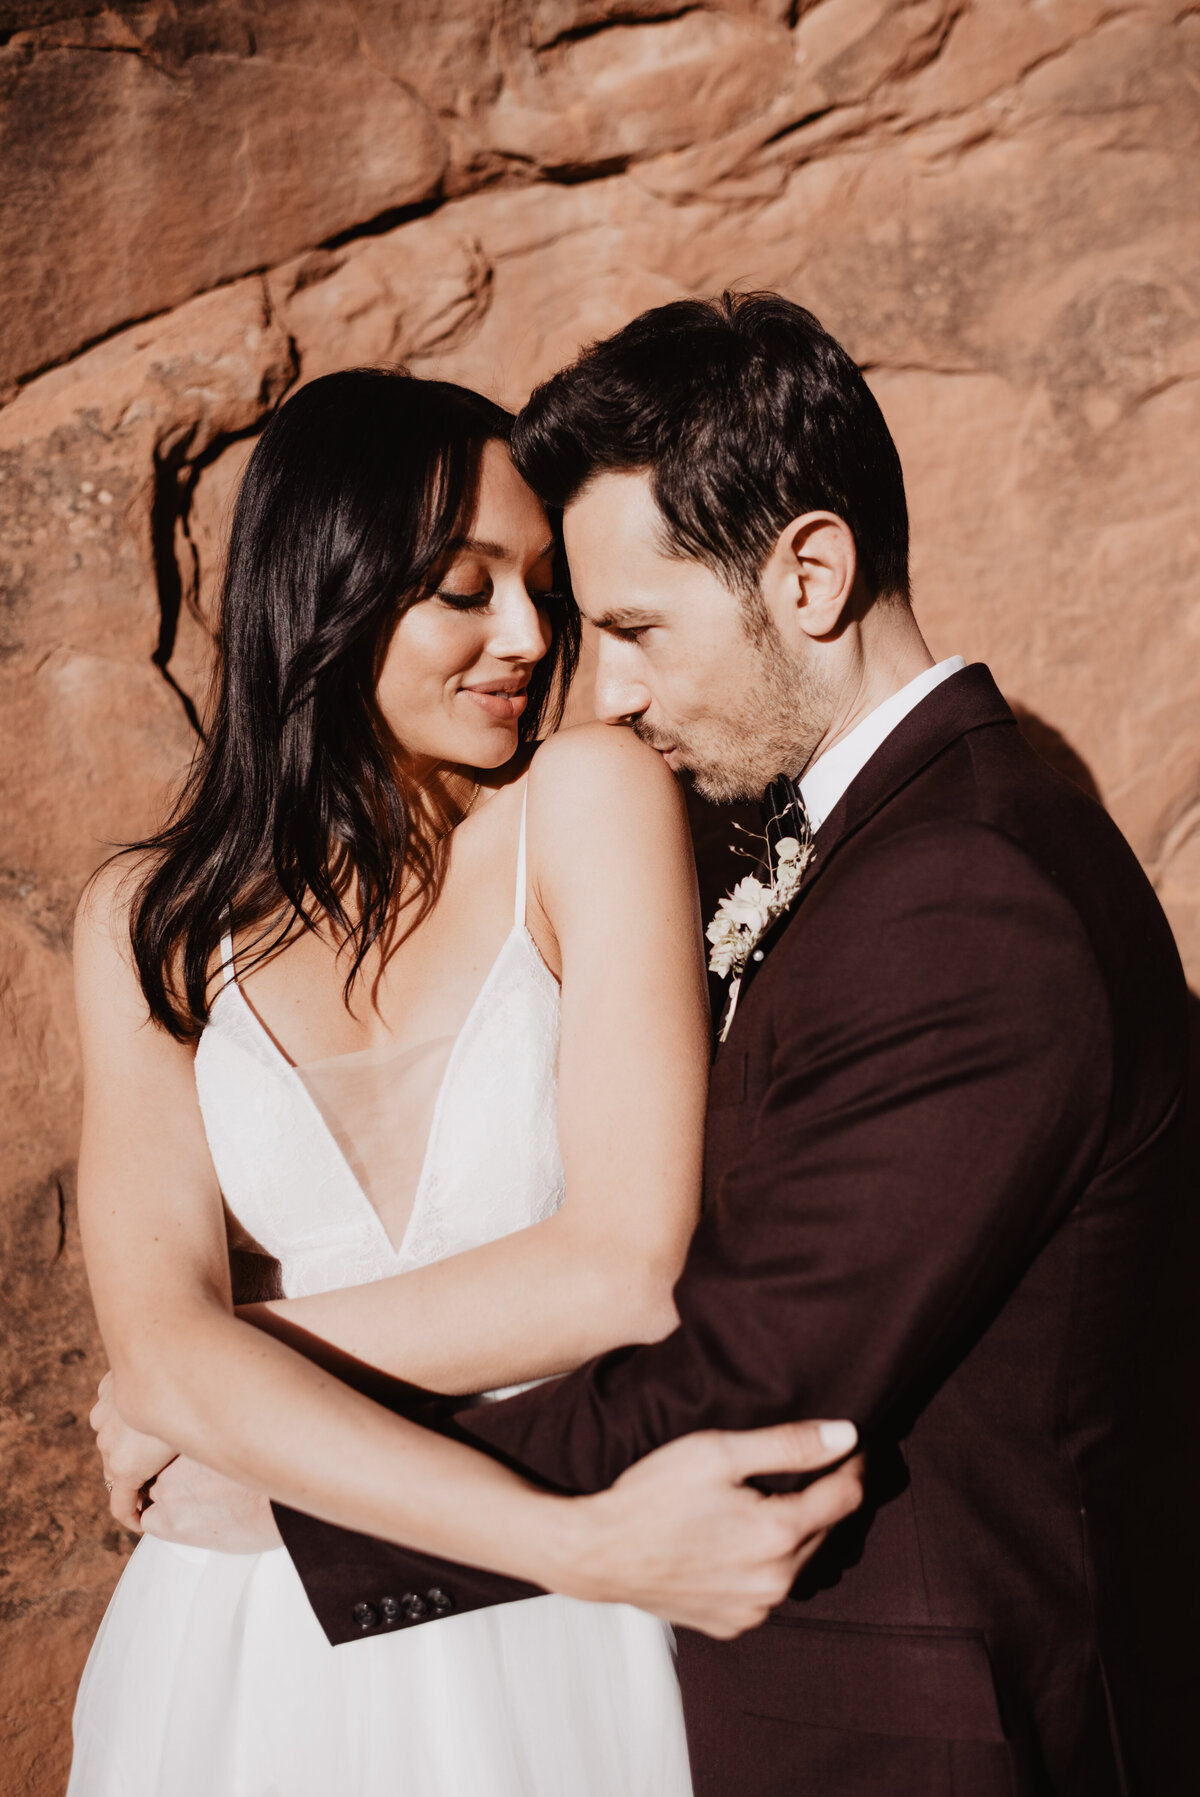 Utah elopement photographer captures groom kissing woman's shoulder